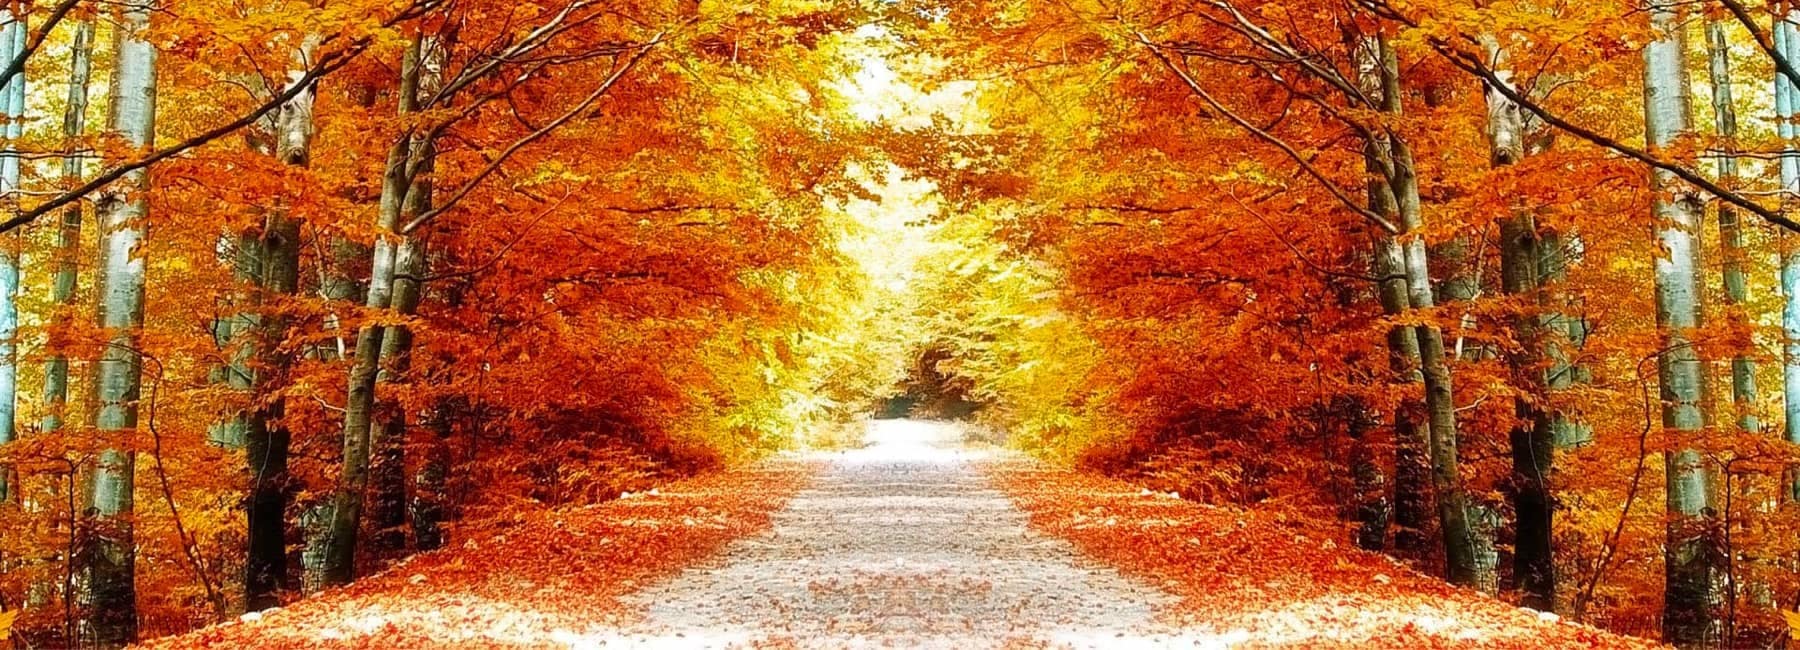 An empty road in fall